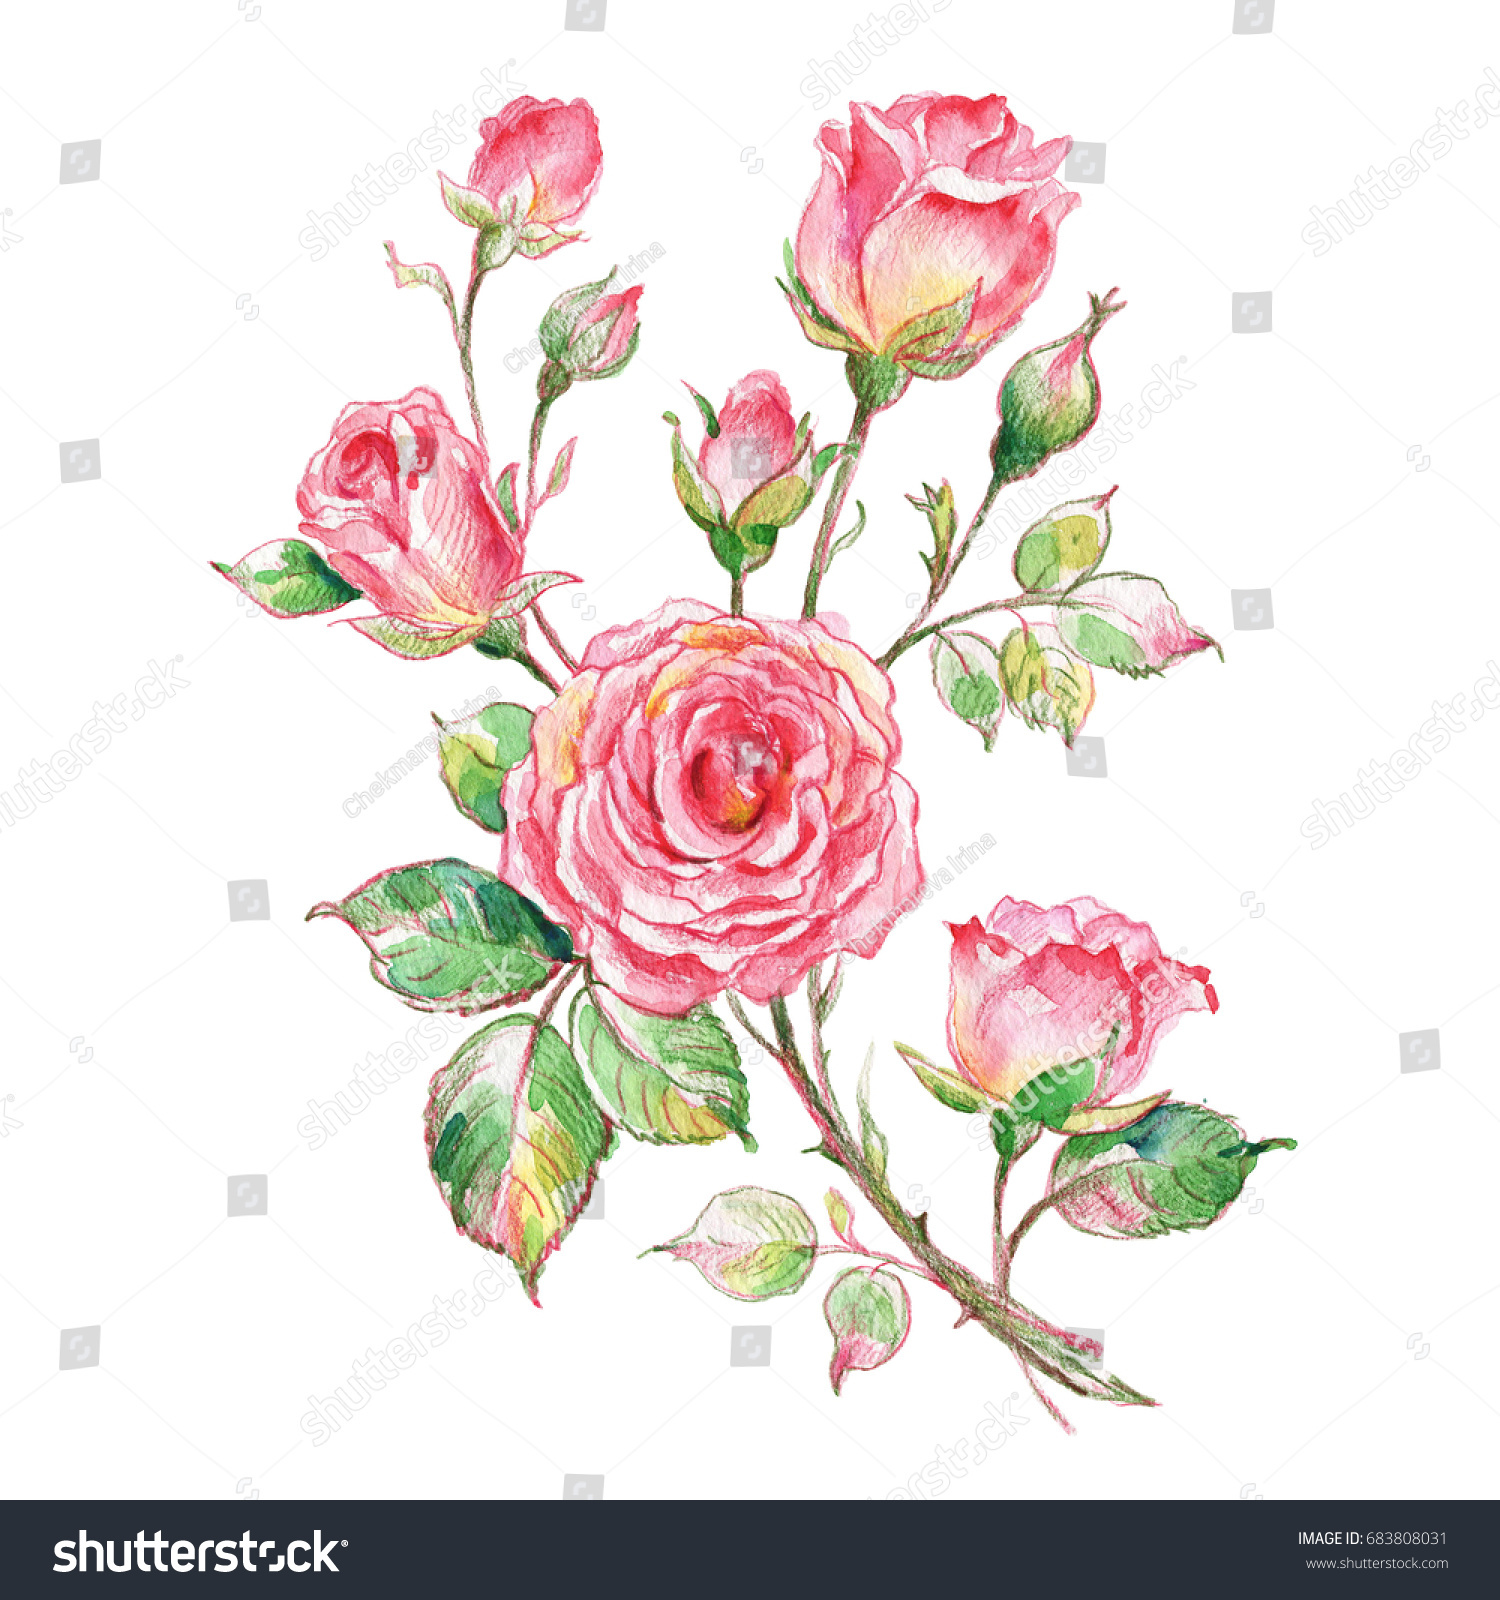 Sketch Watercolor Pencil Roses Bouquet Stock Illustration 683808031 ...